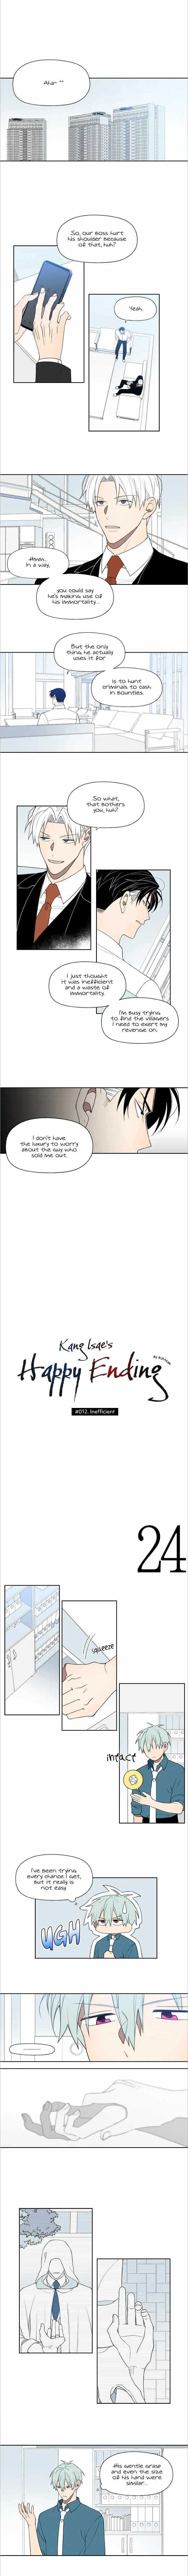 Kang Isae's Happy Ending - chapter 12 - #1